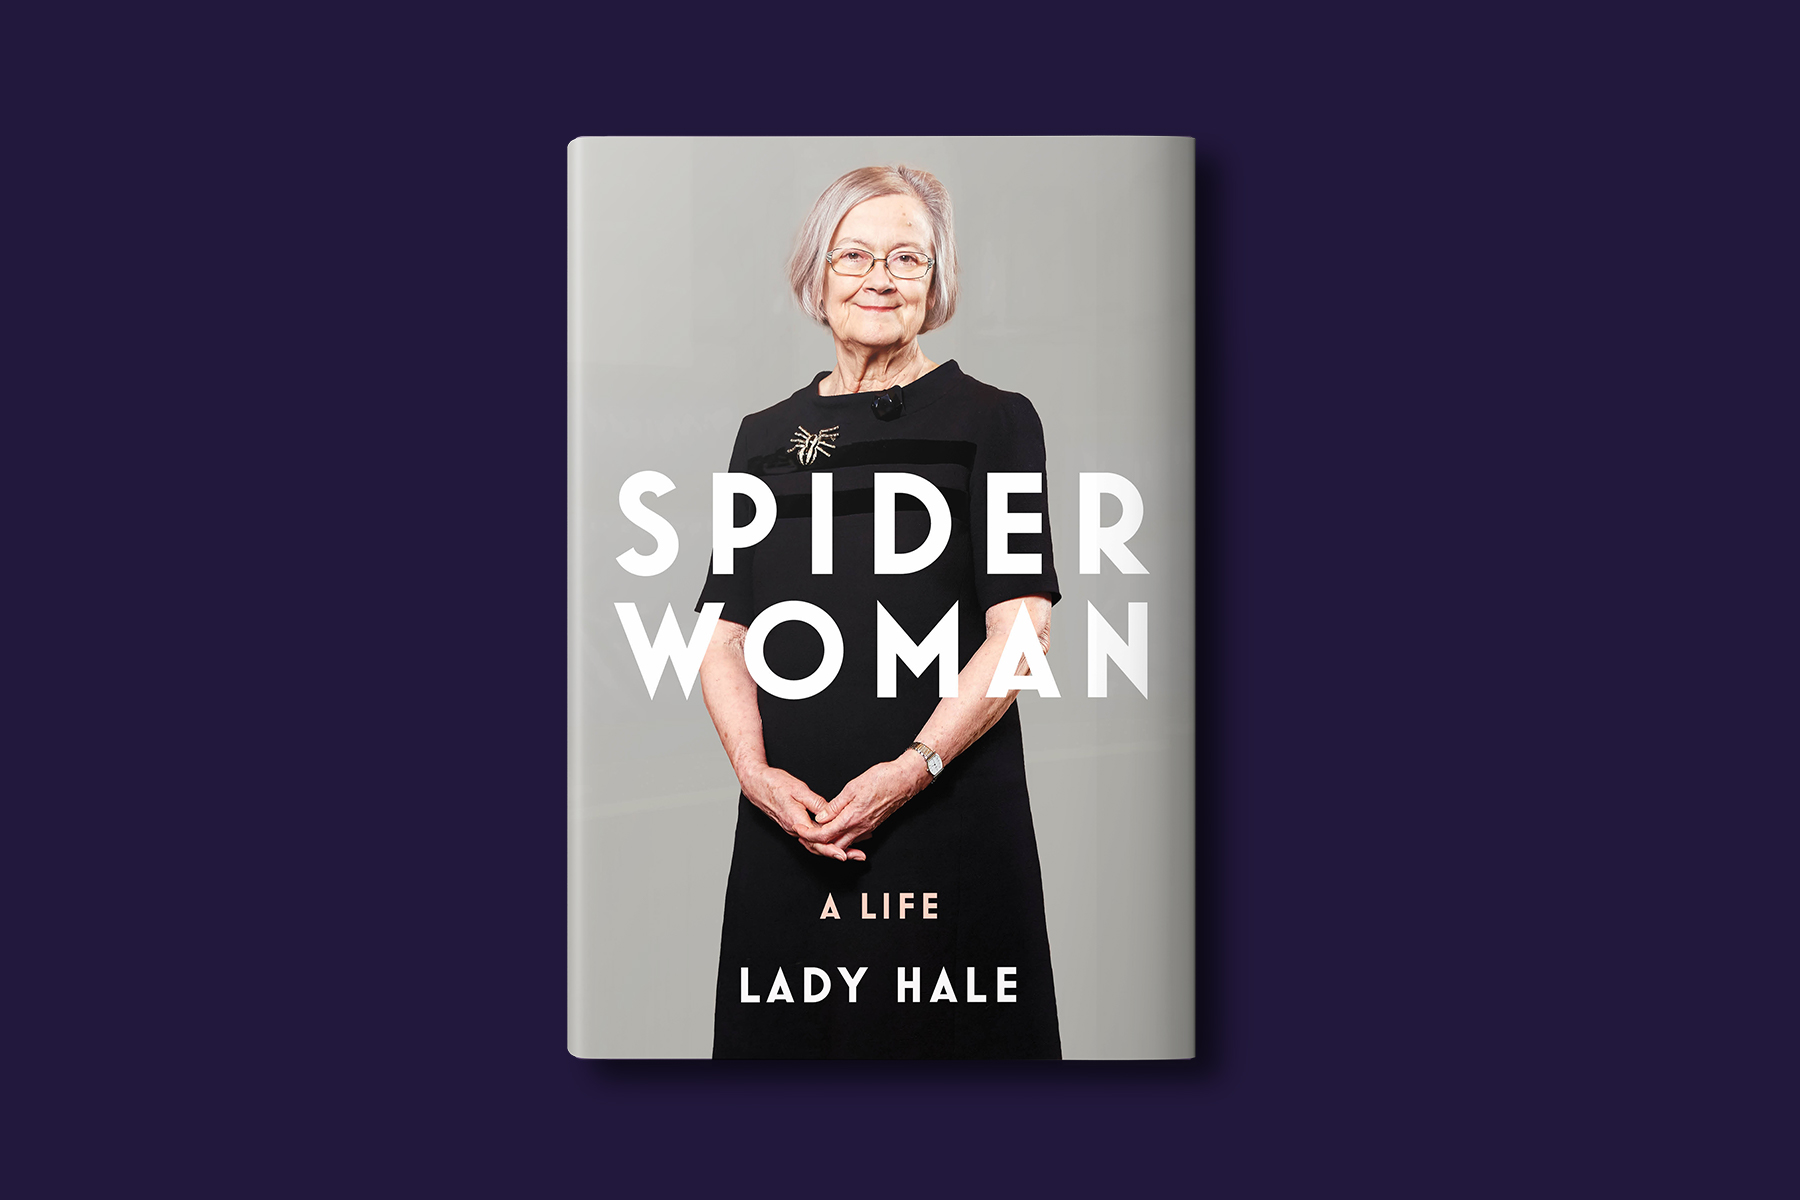 A photo of Lady Hale's memoir 'Spider Woman' against a purple background.